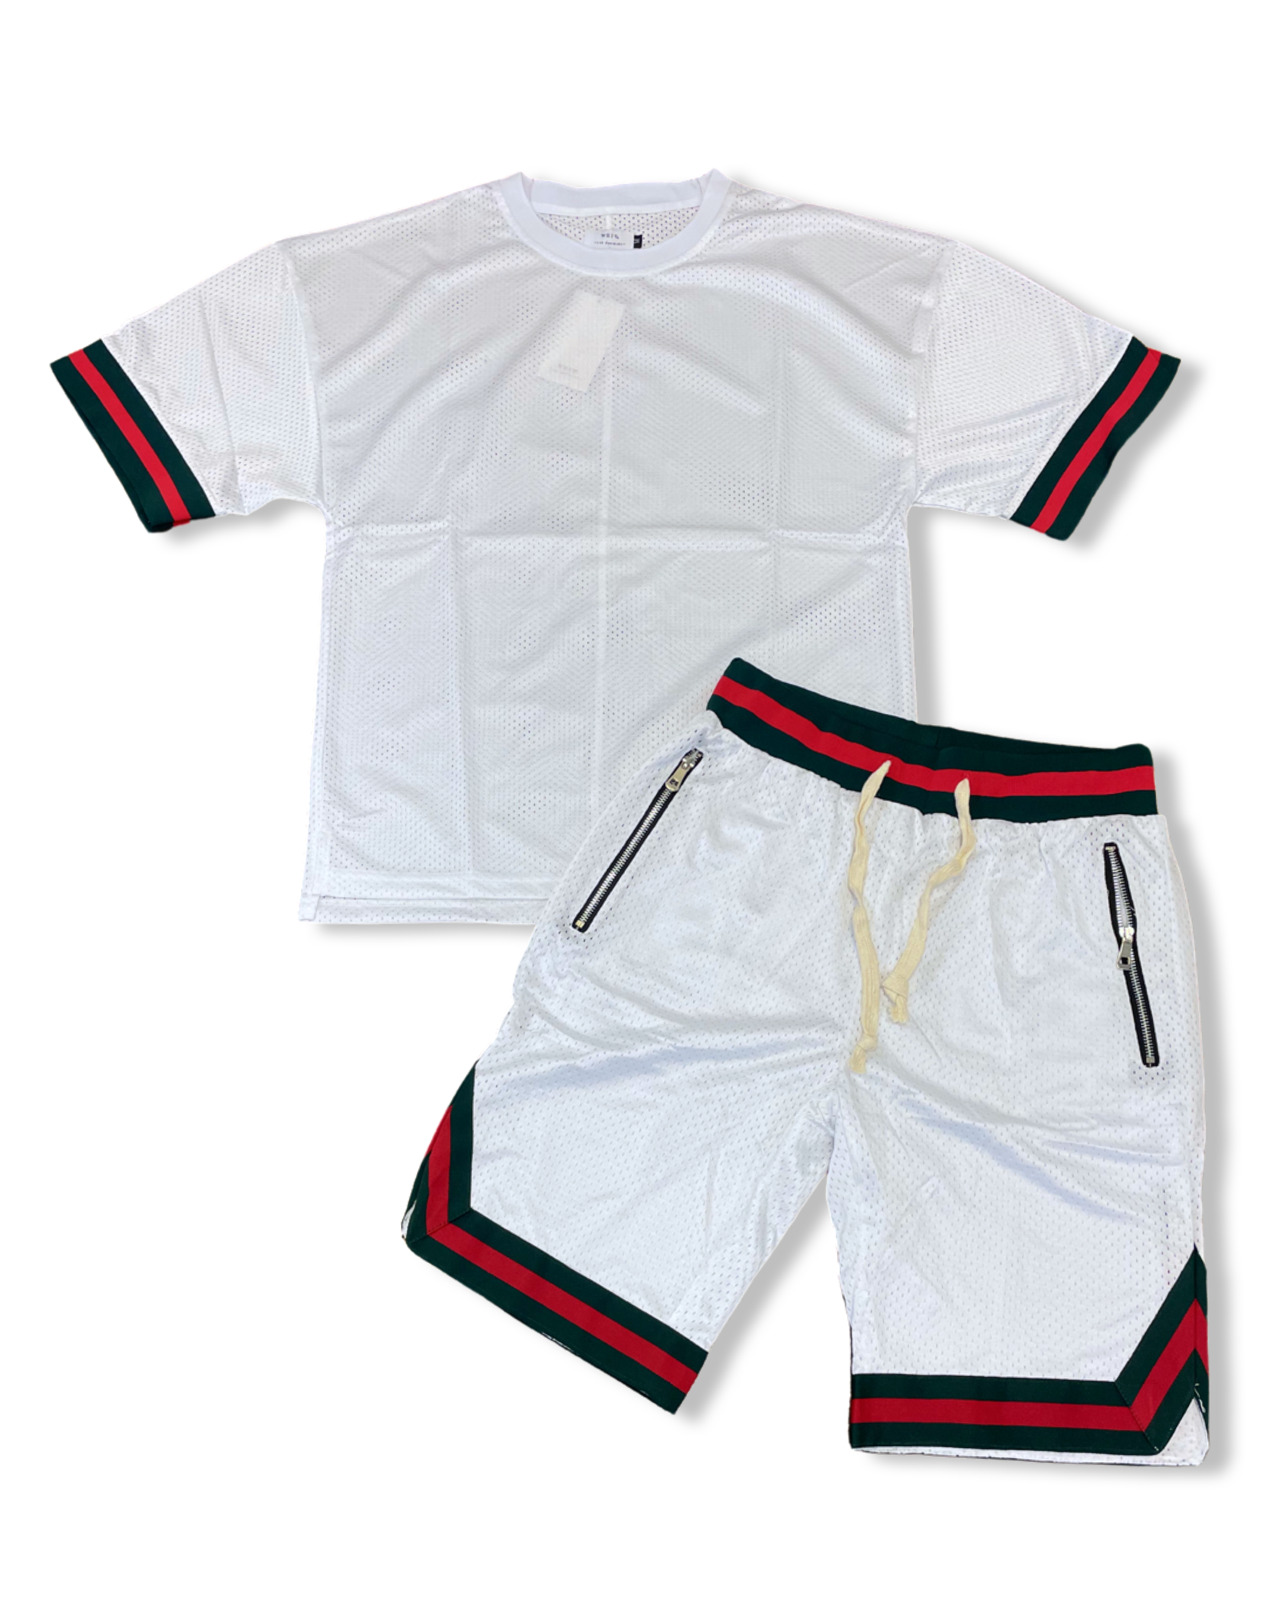 Mens 2pc Sports Zipper Pocket Gym Workout Active Jersey Set T-shirt+ Mesh Shorts